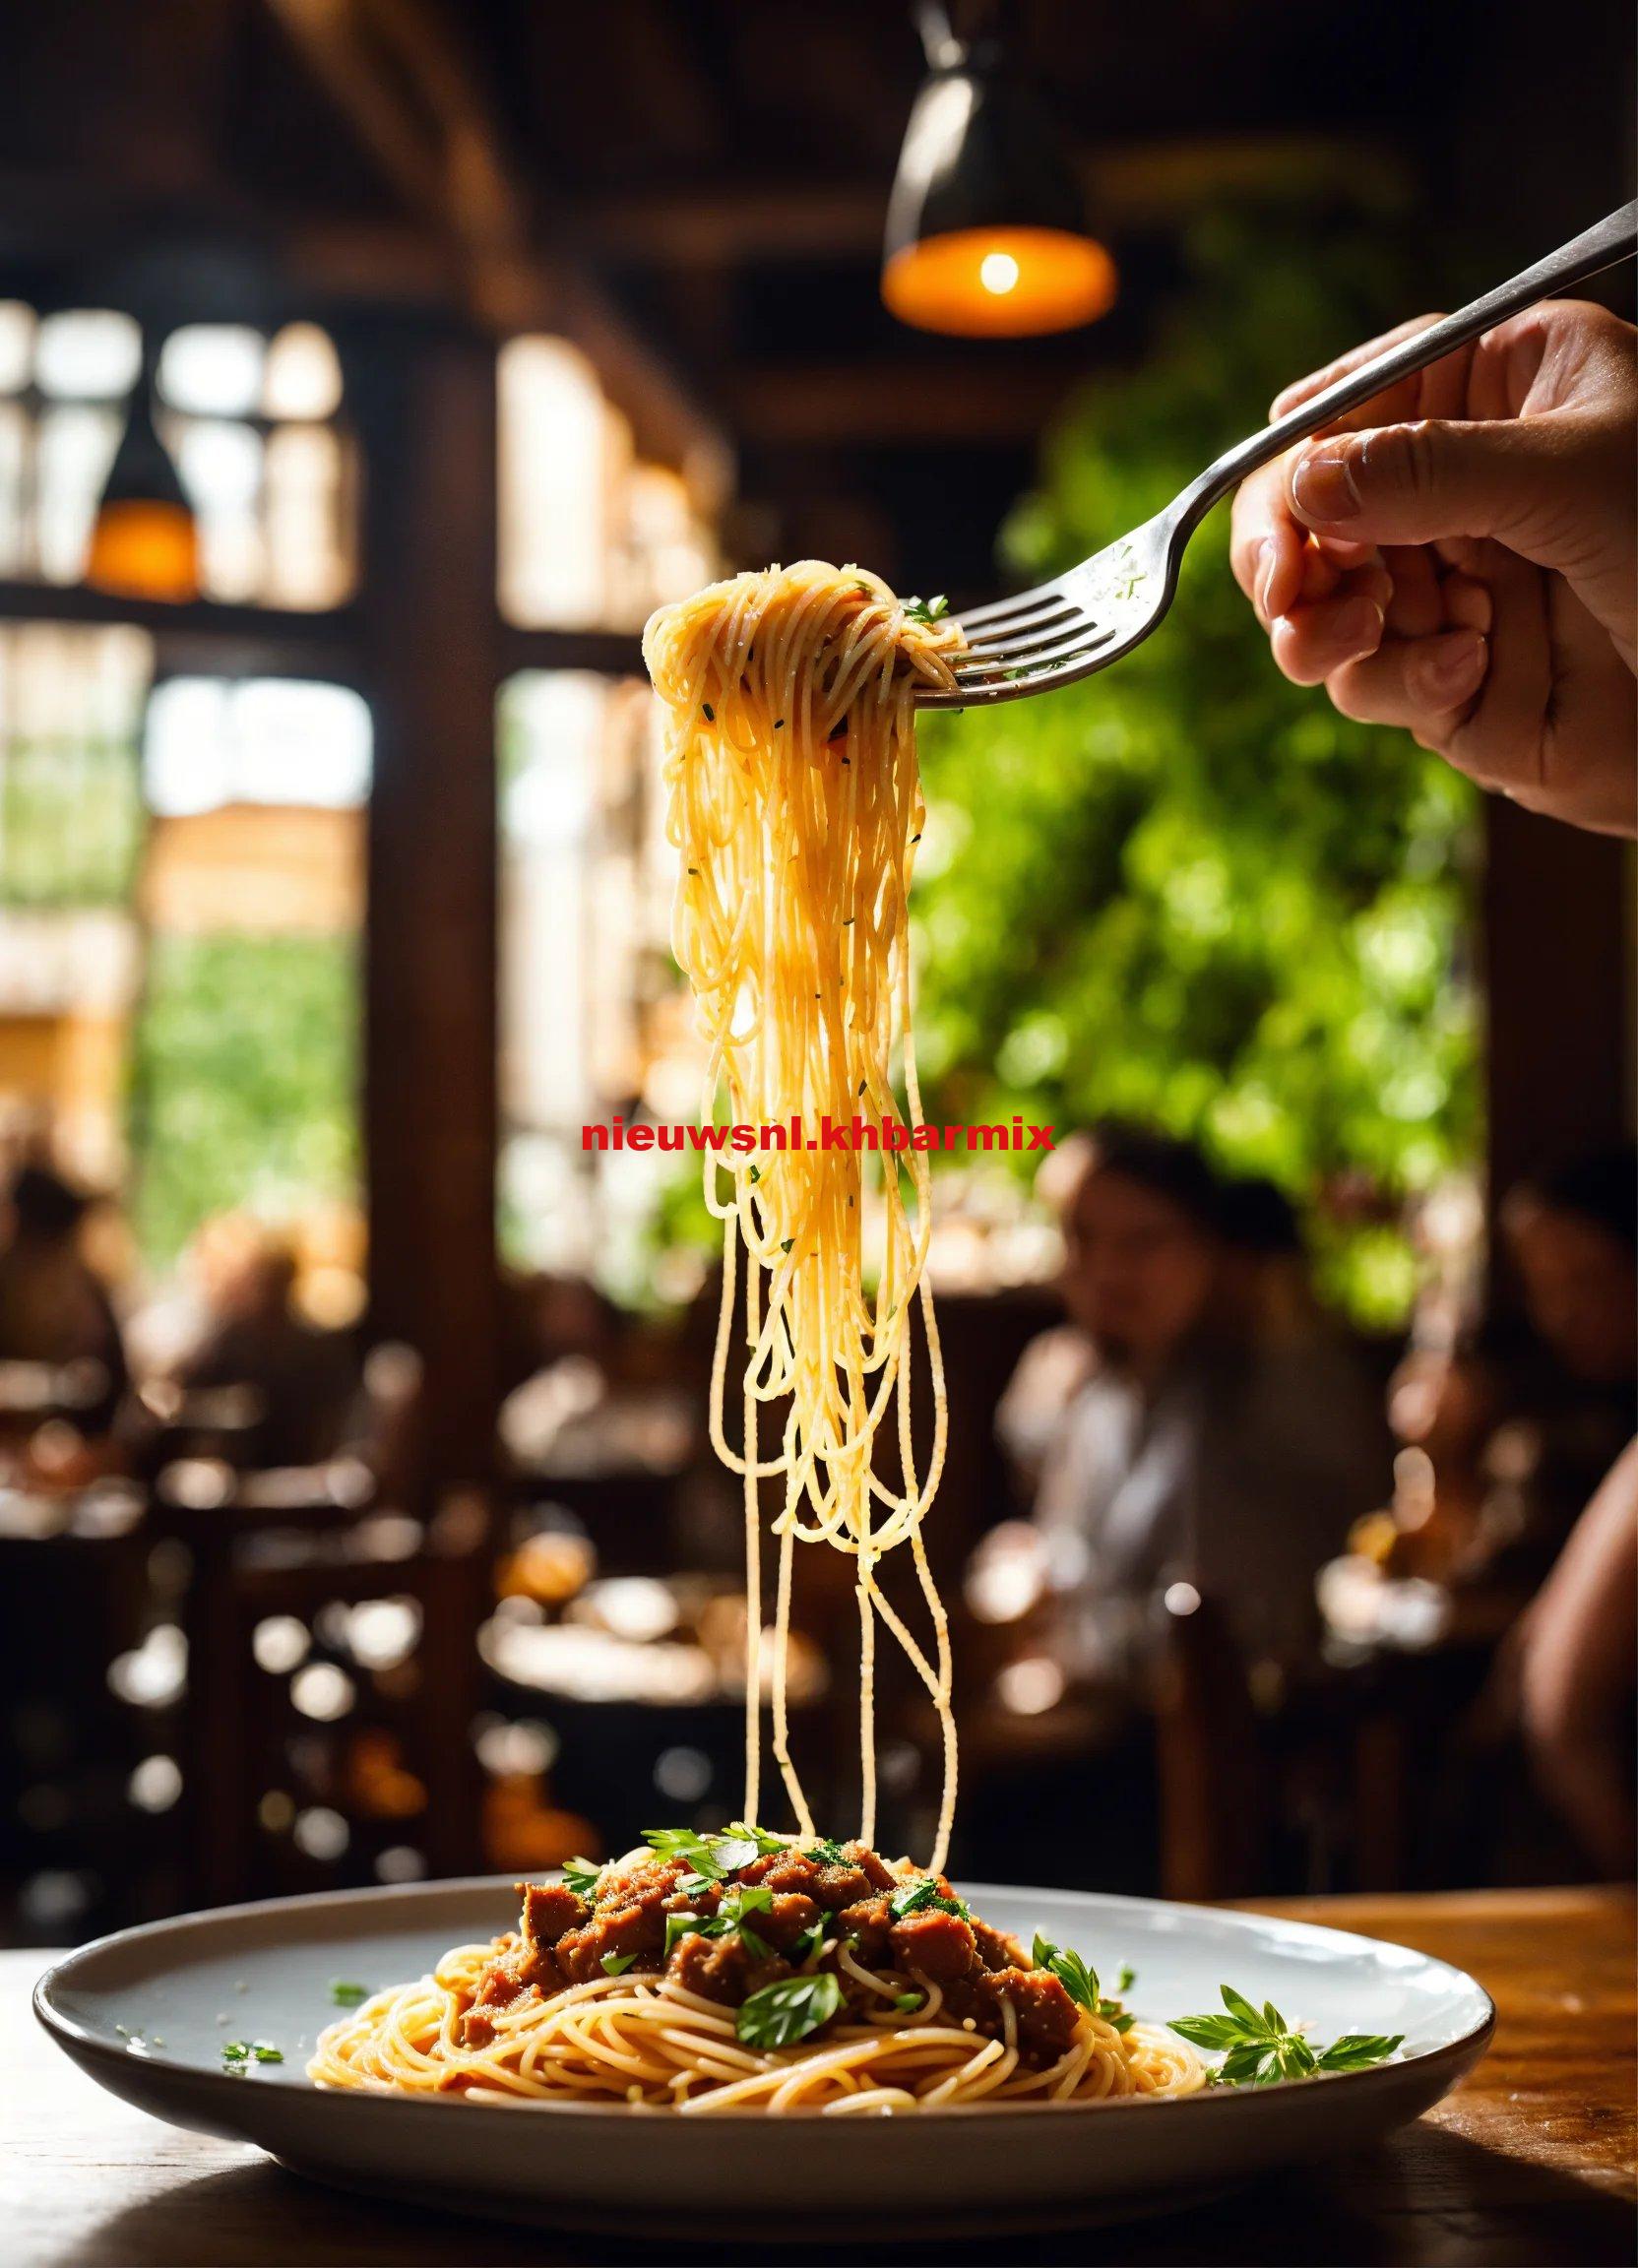 oeveel gram spaghetti per persoon